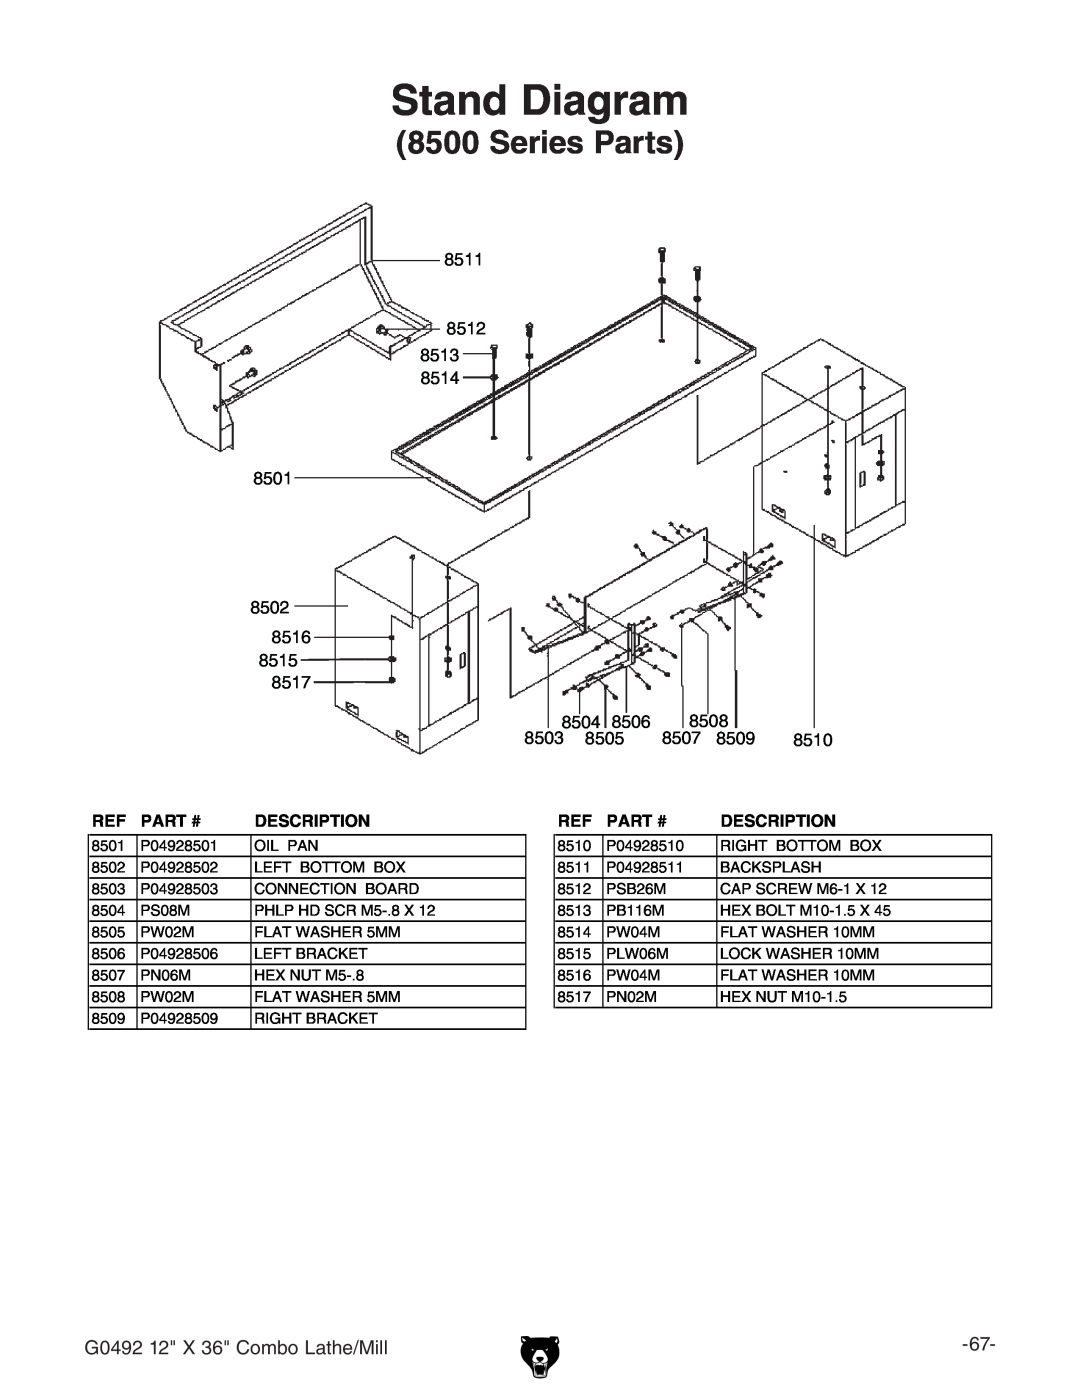 Grizzly G0492 manual Stand Diagram, Series Parts, &M+8dbWdAViZ$Baa, Part #, Description 